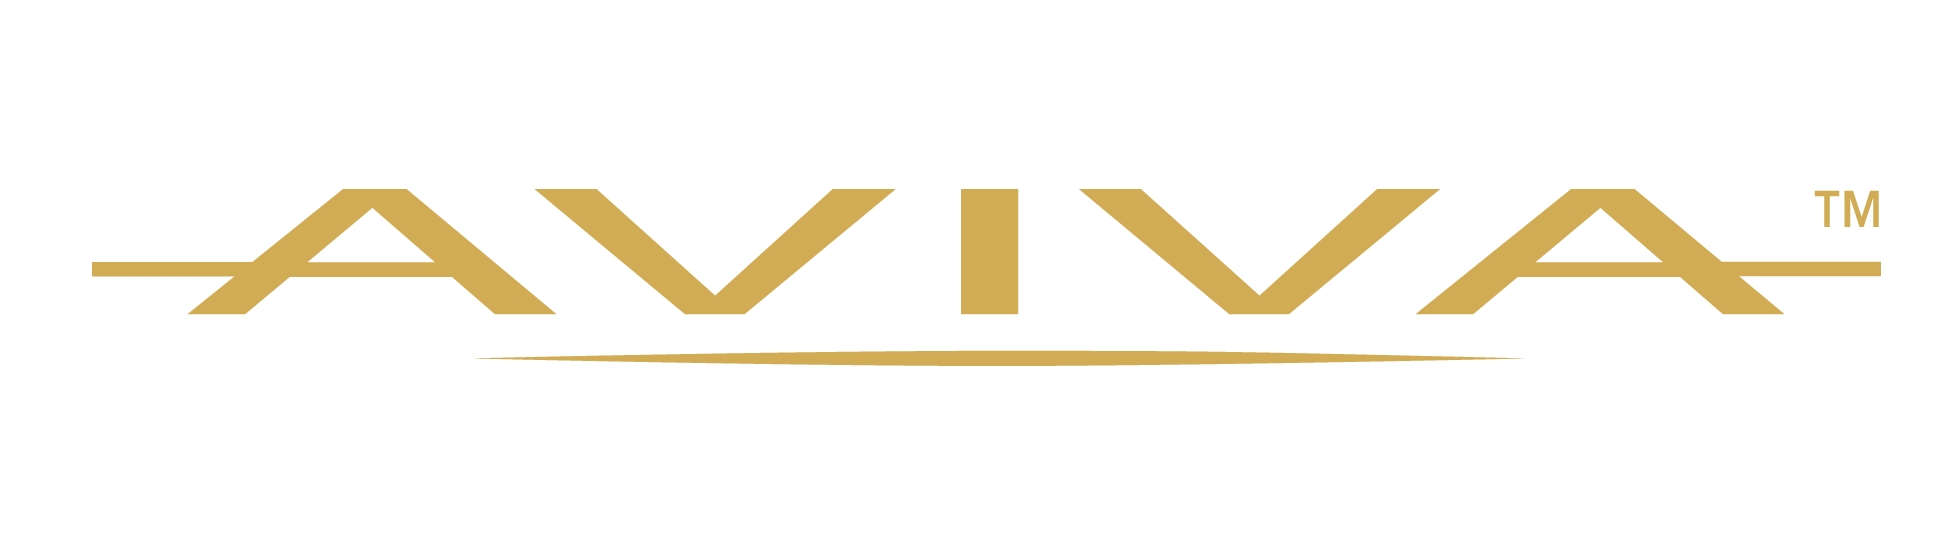 Aviva_gold_logo-transparent